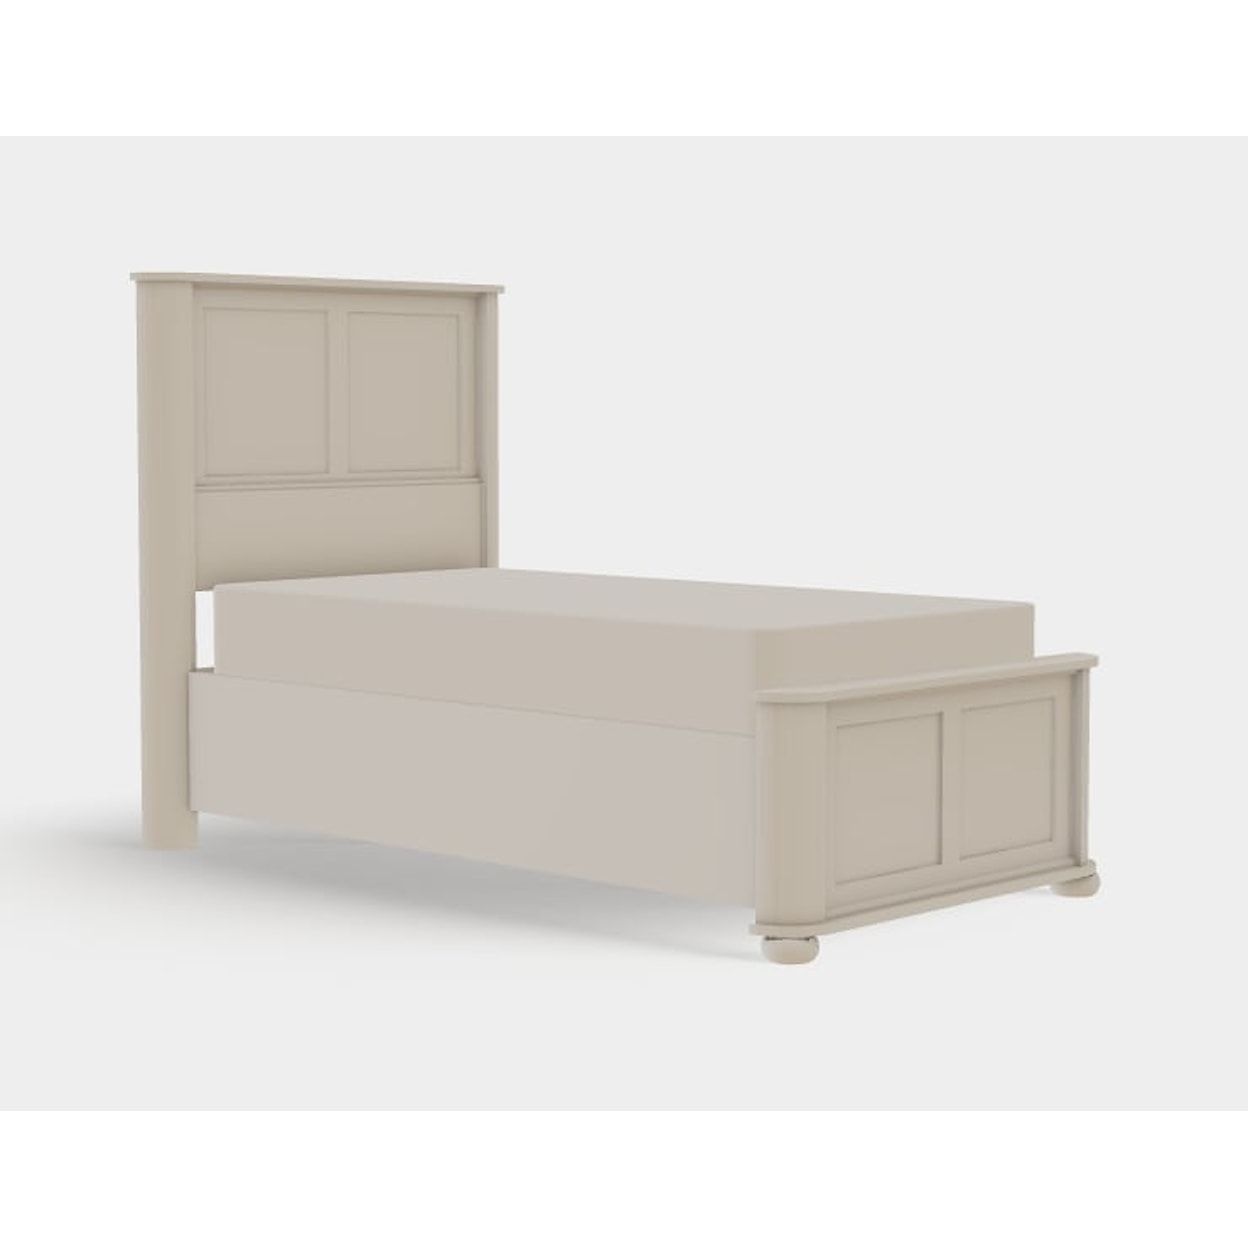 Mavin Kingsport Twin XL Panel Bed Right Drawerside